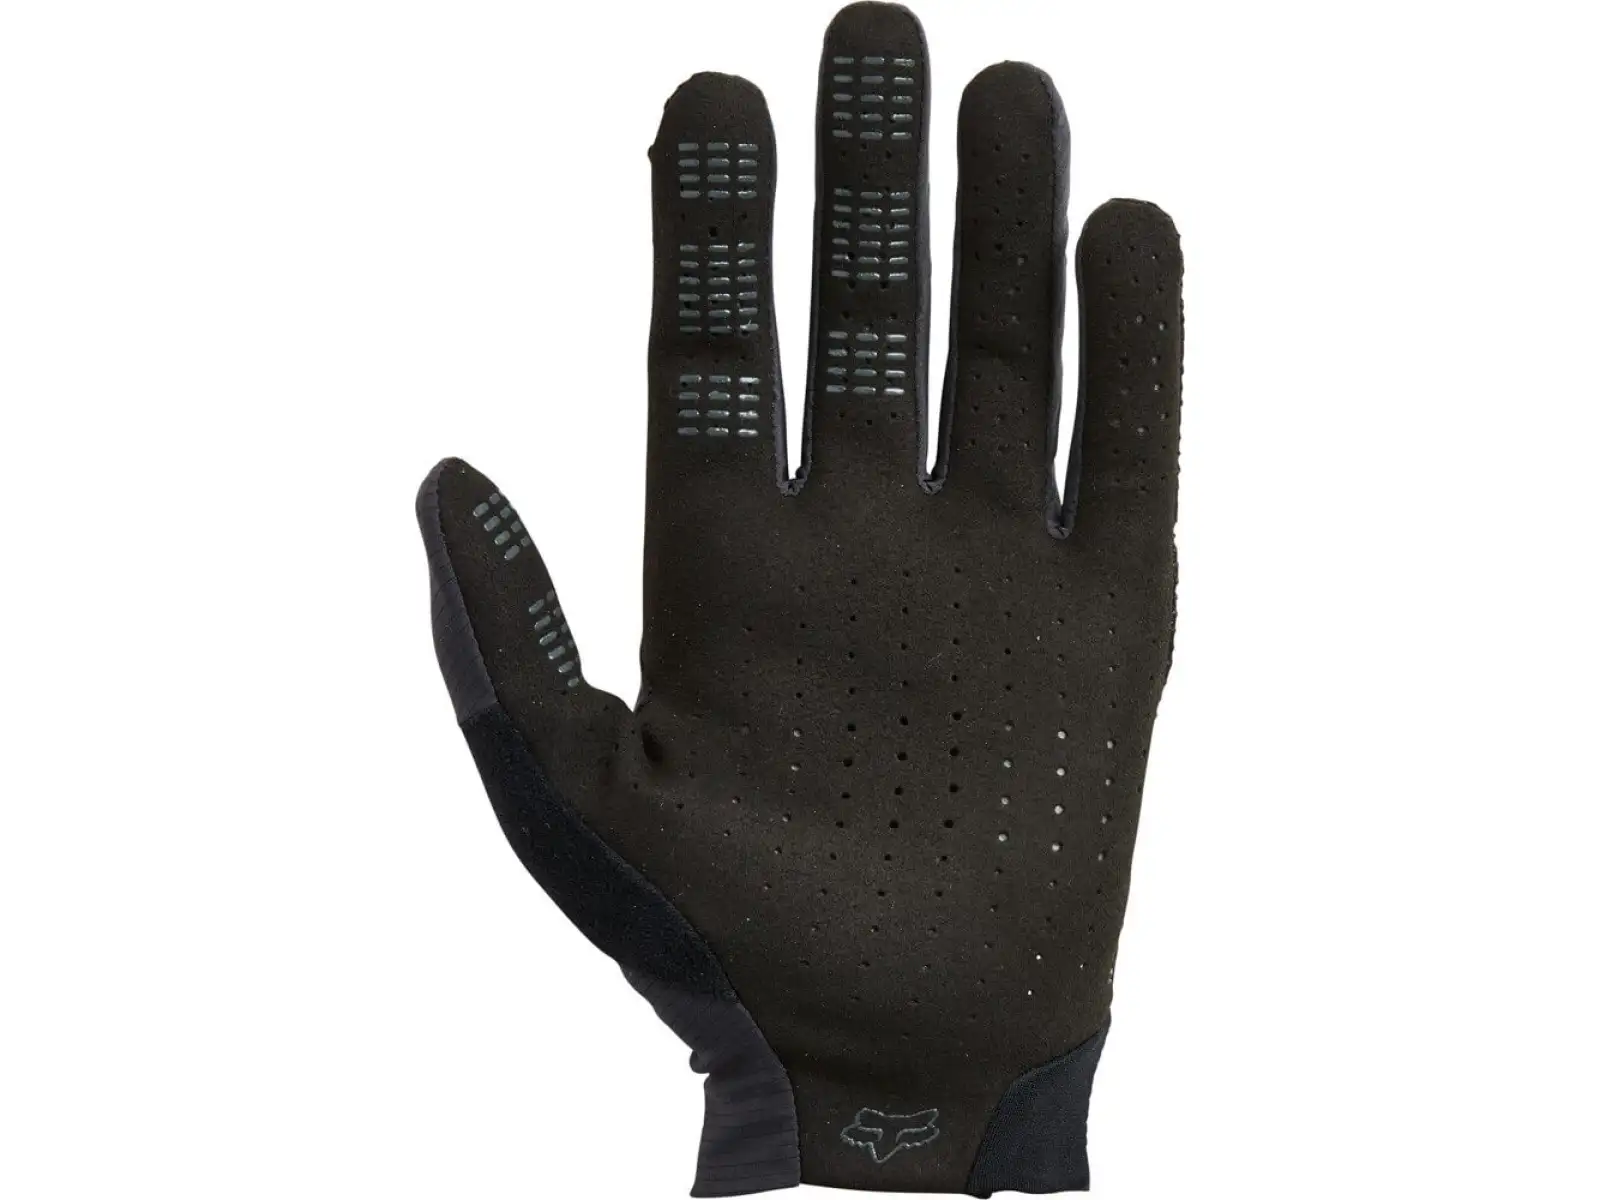 Fox Flexair Pro pánské rukavice černá